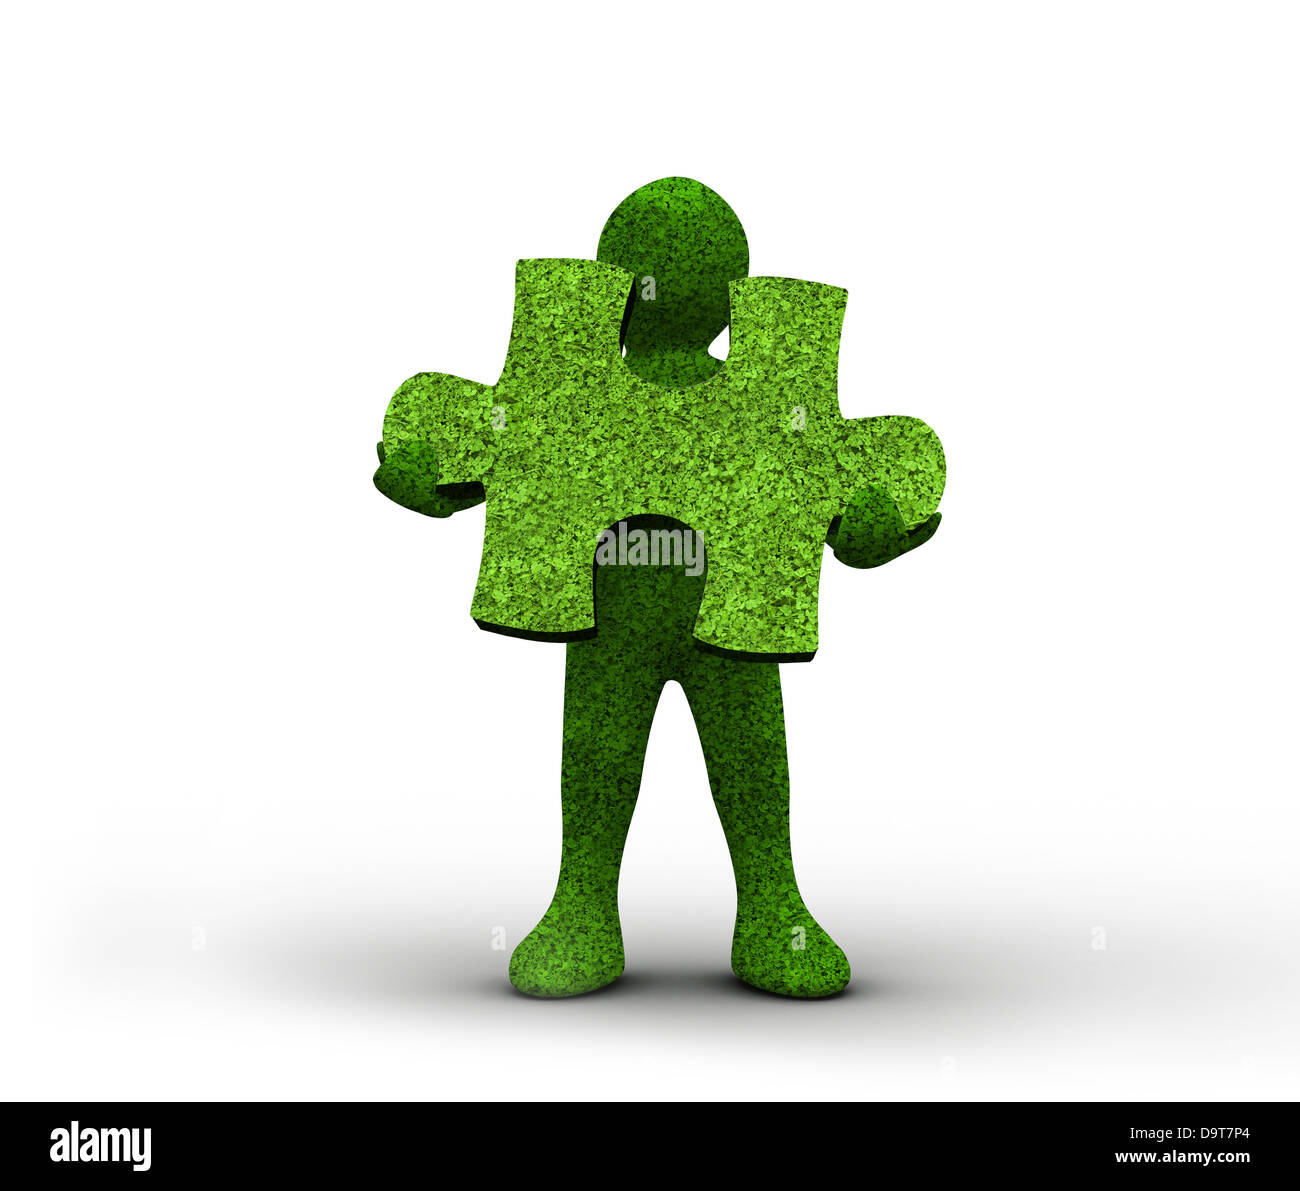 Green human representation holding a grass jigsaw puzzle Stock Photo